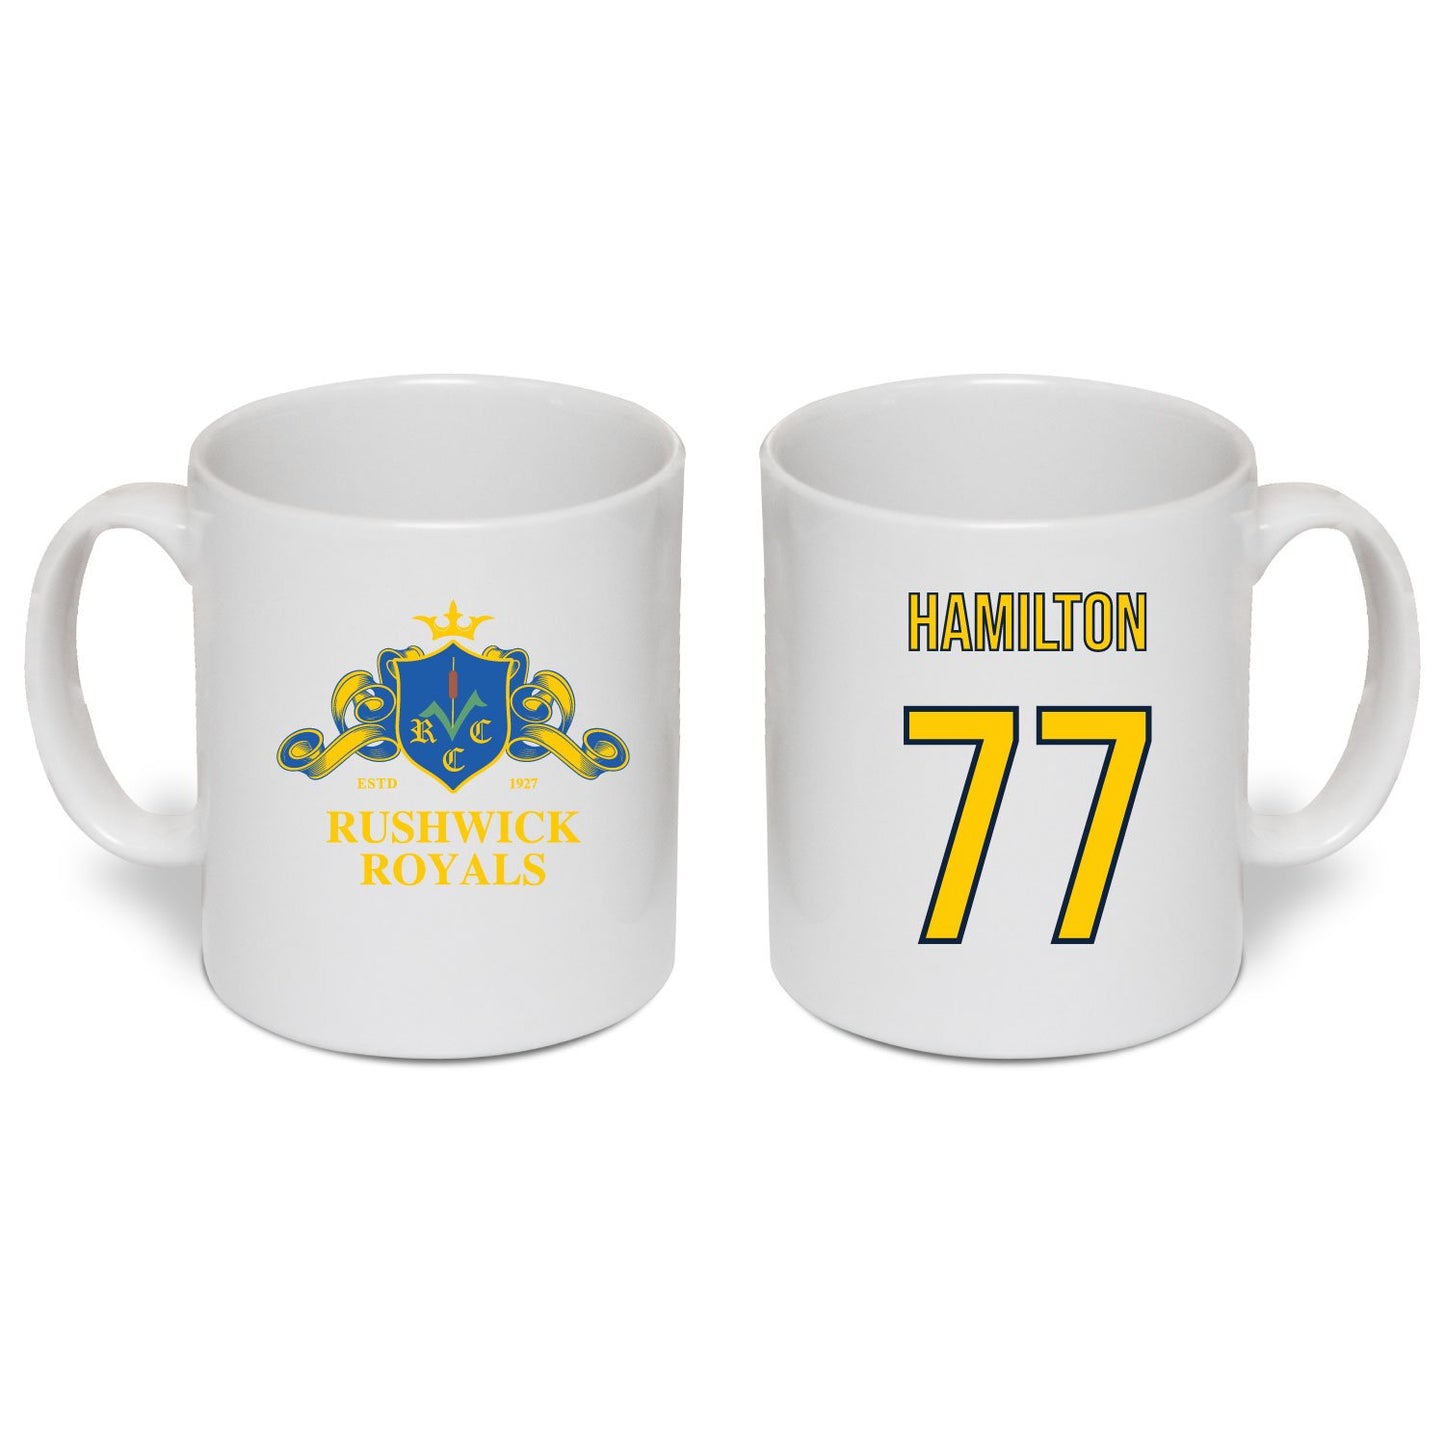 rushwick royals mug